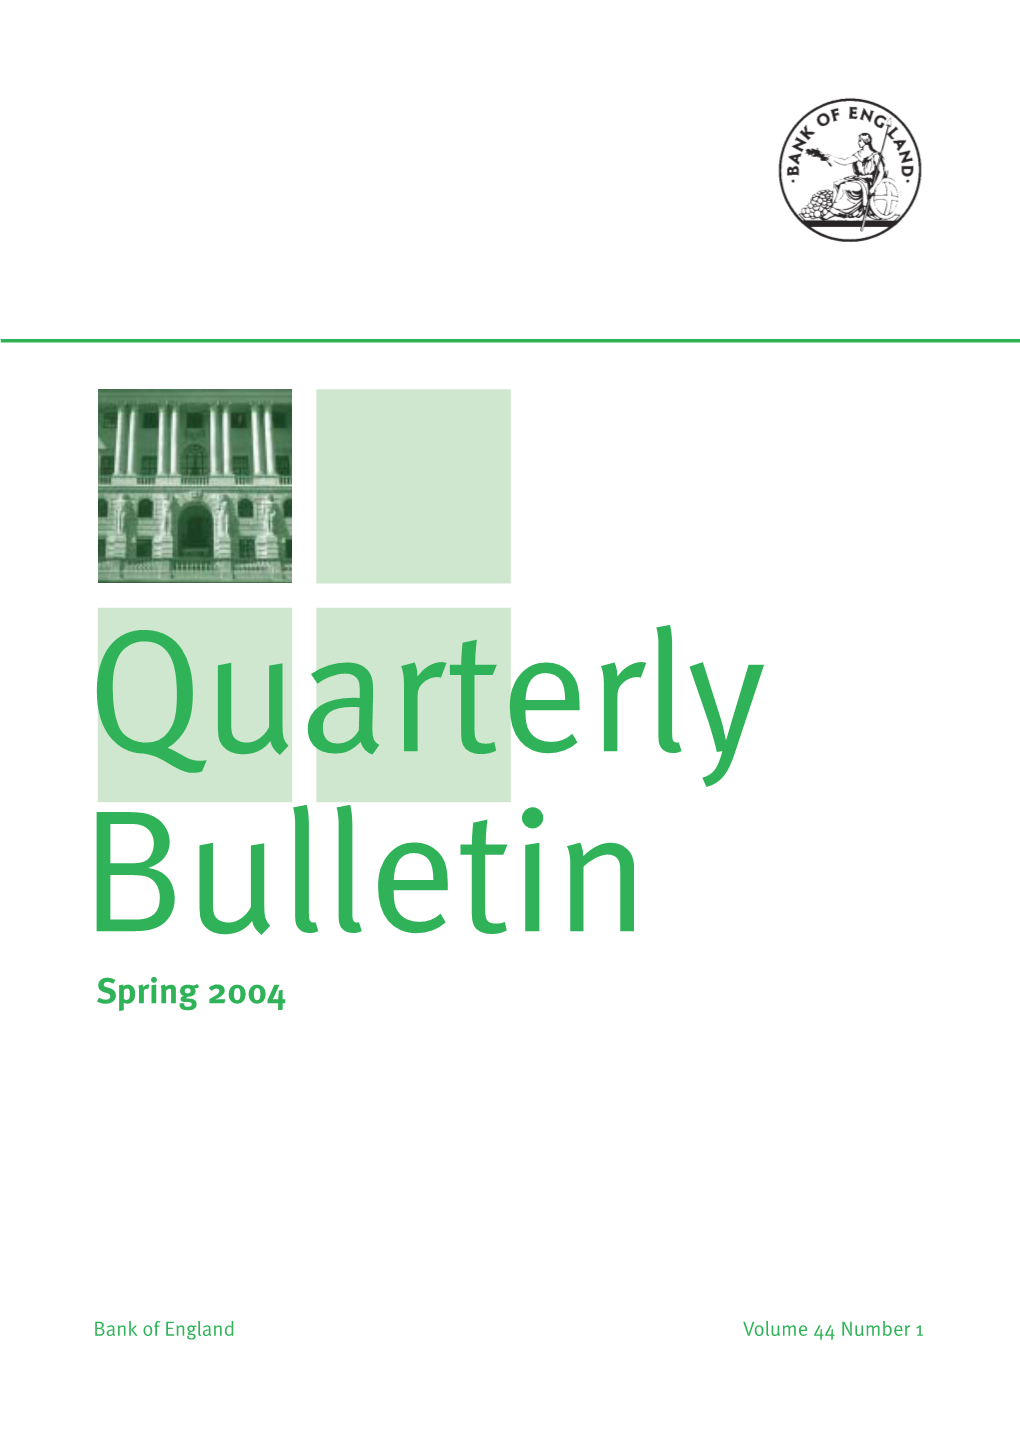 Quarterly Bulletin Spring 2004